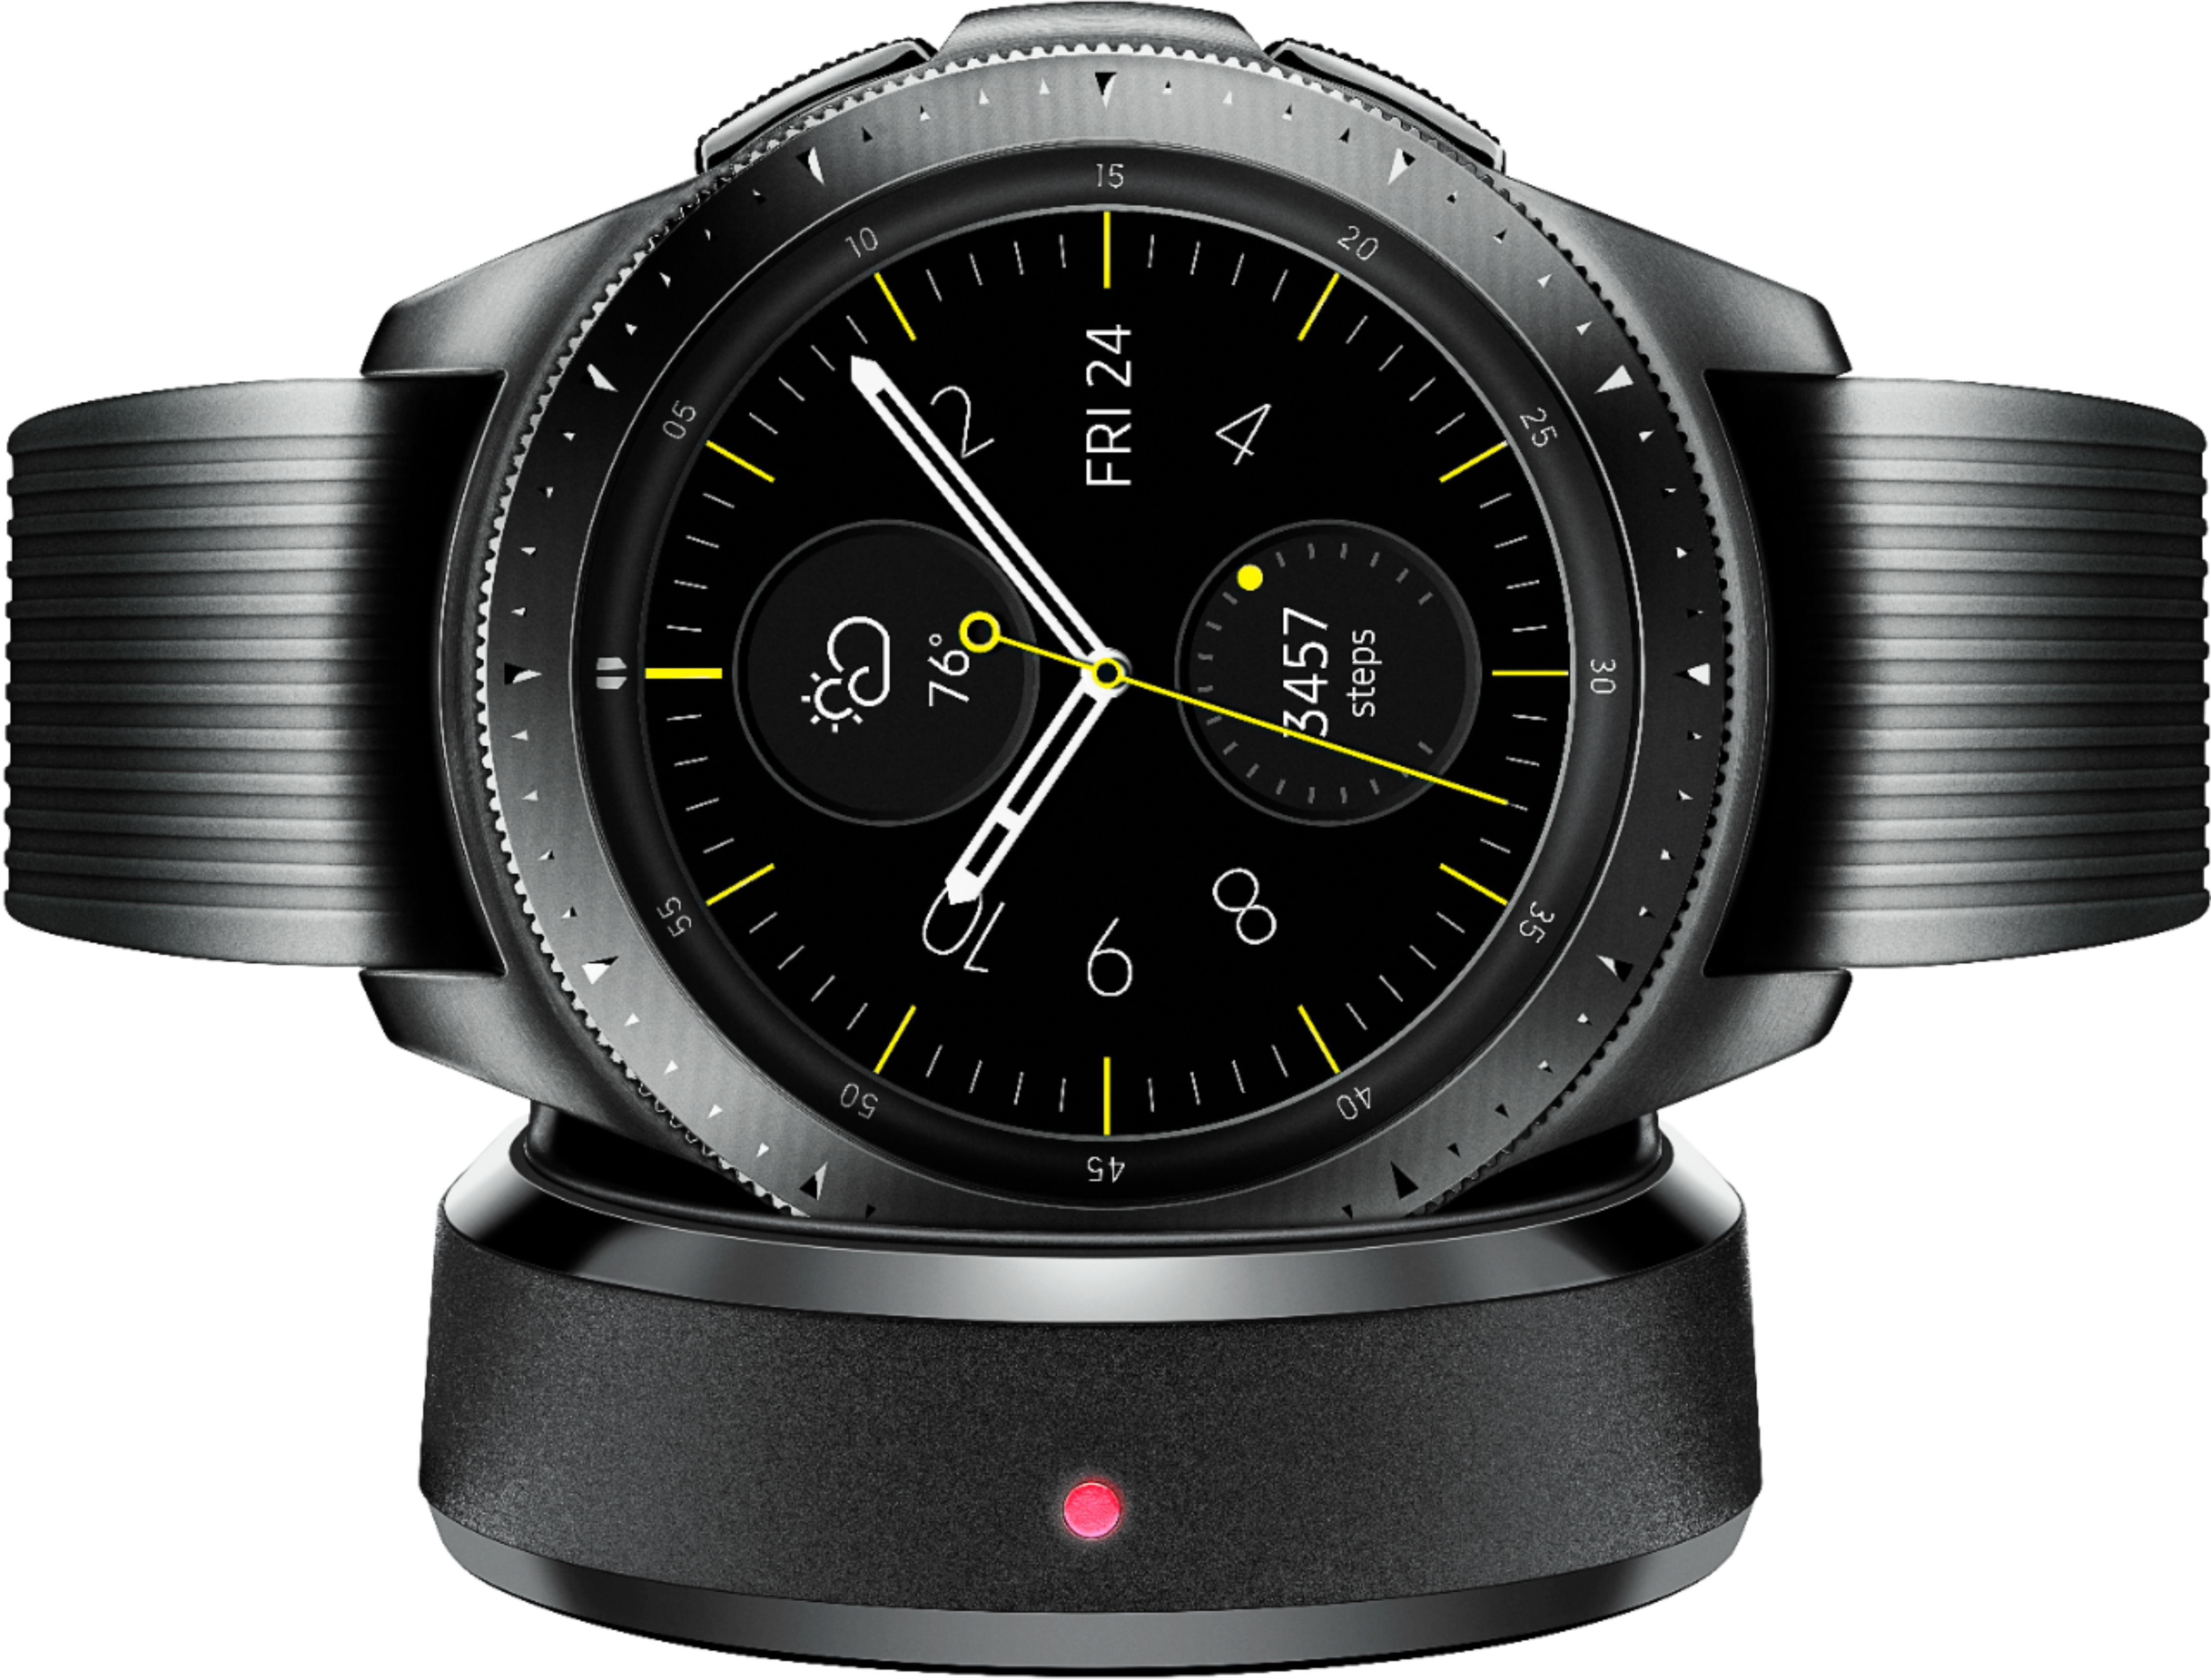 Galaxy Watch LTE (42mm, Black) - Price, Reviews & Specs